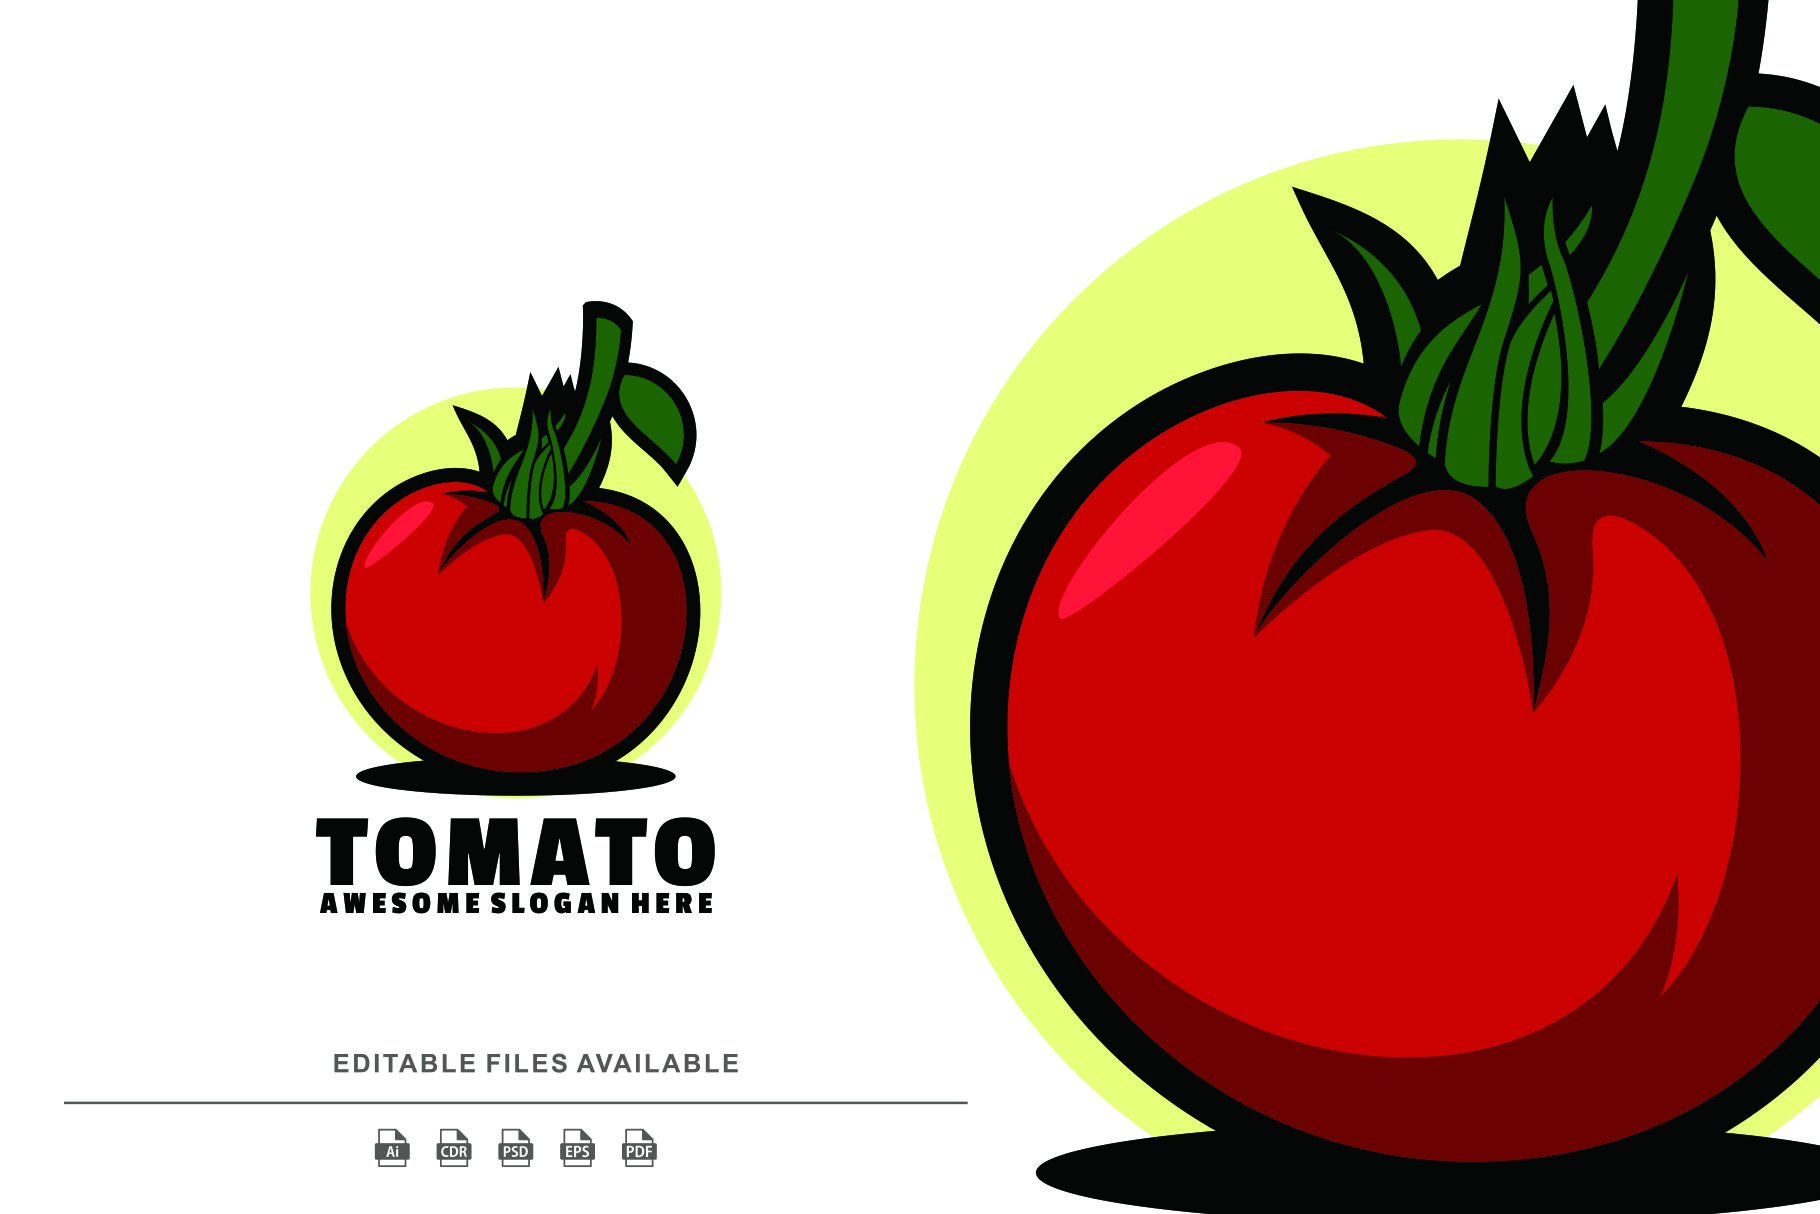 Tomato Simple Logo cover image.